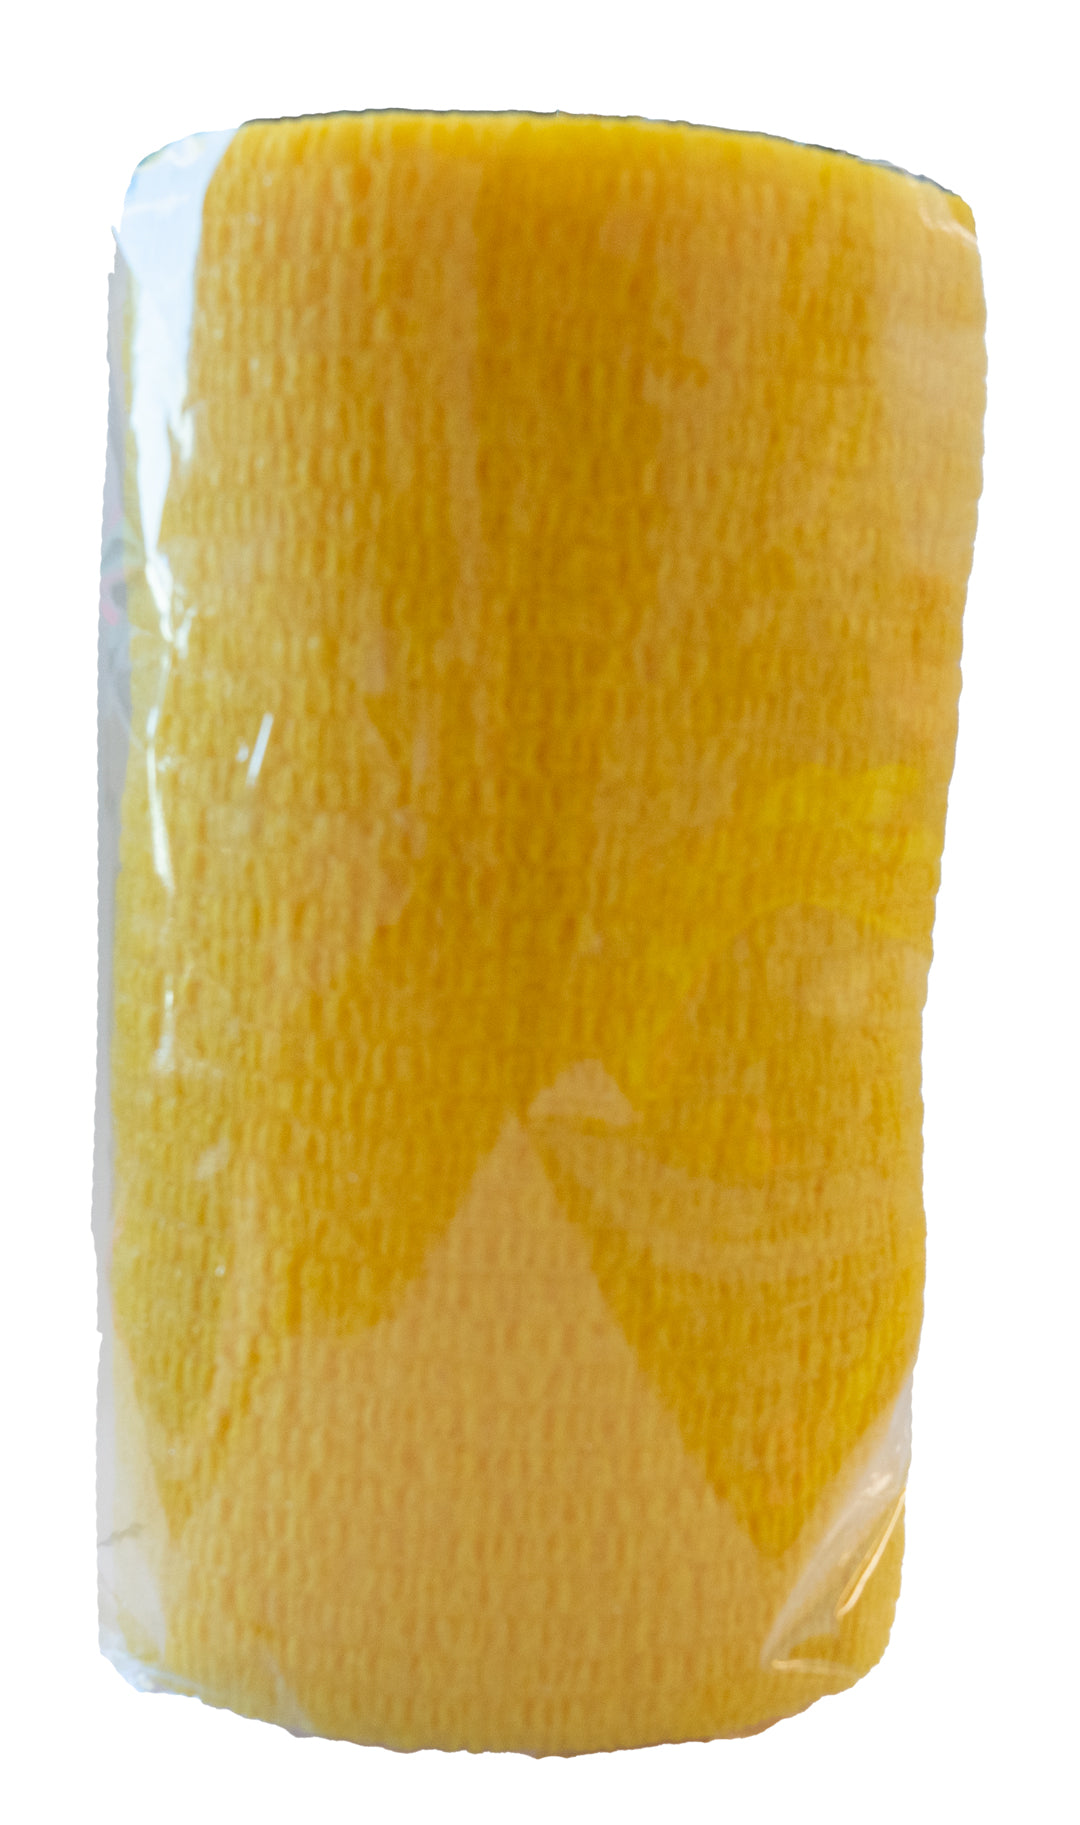 Elastic Bandages - 10cm x 4.5m - Assorted Colours